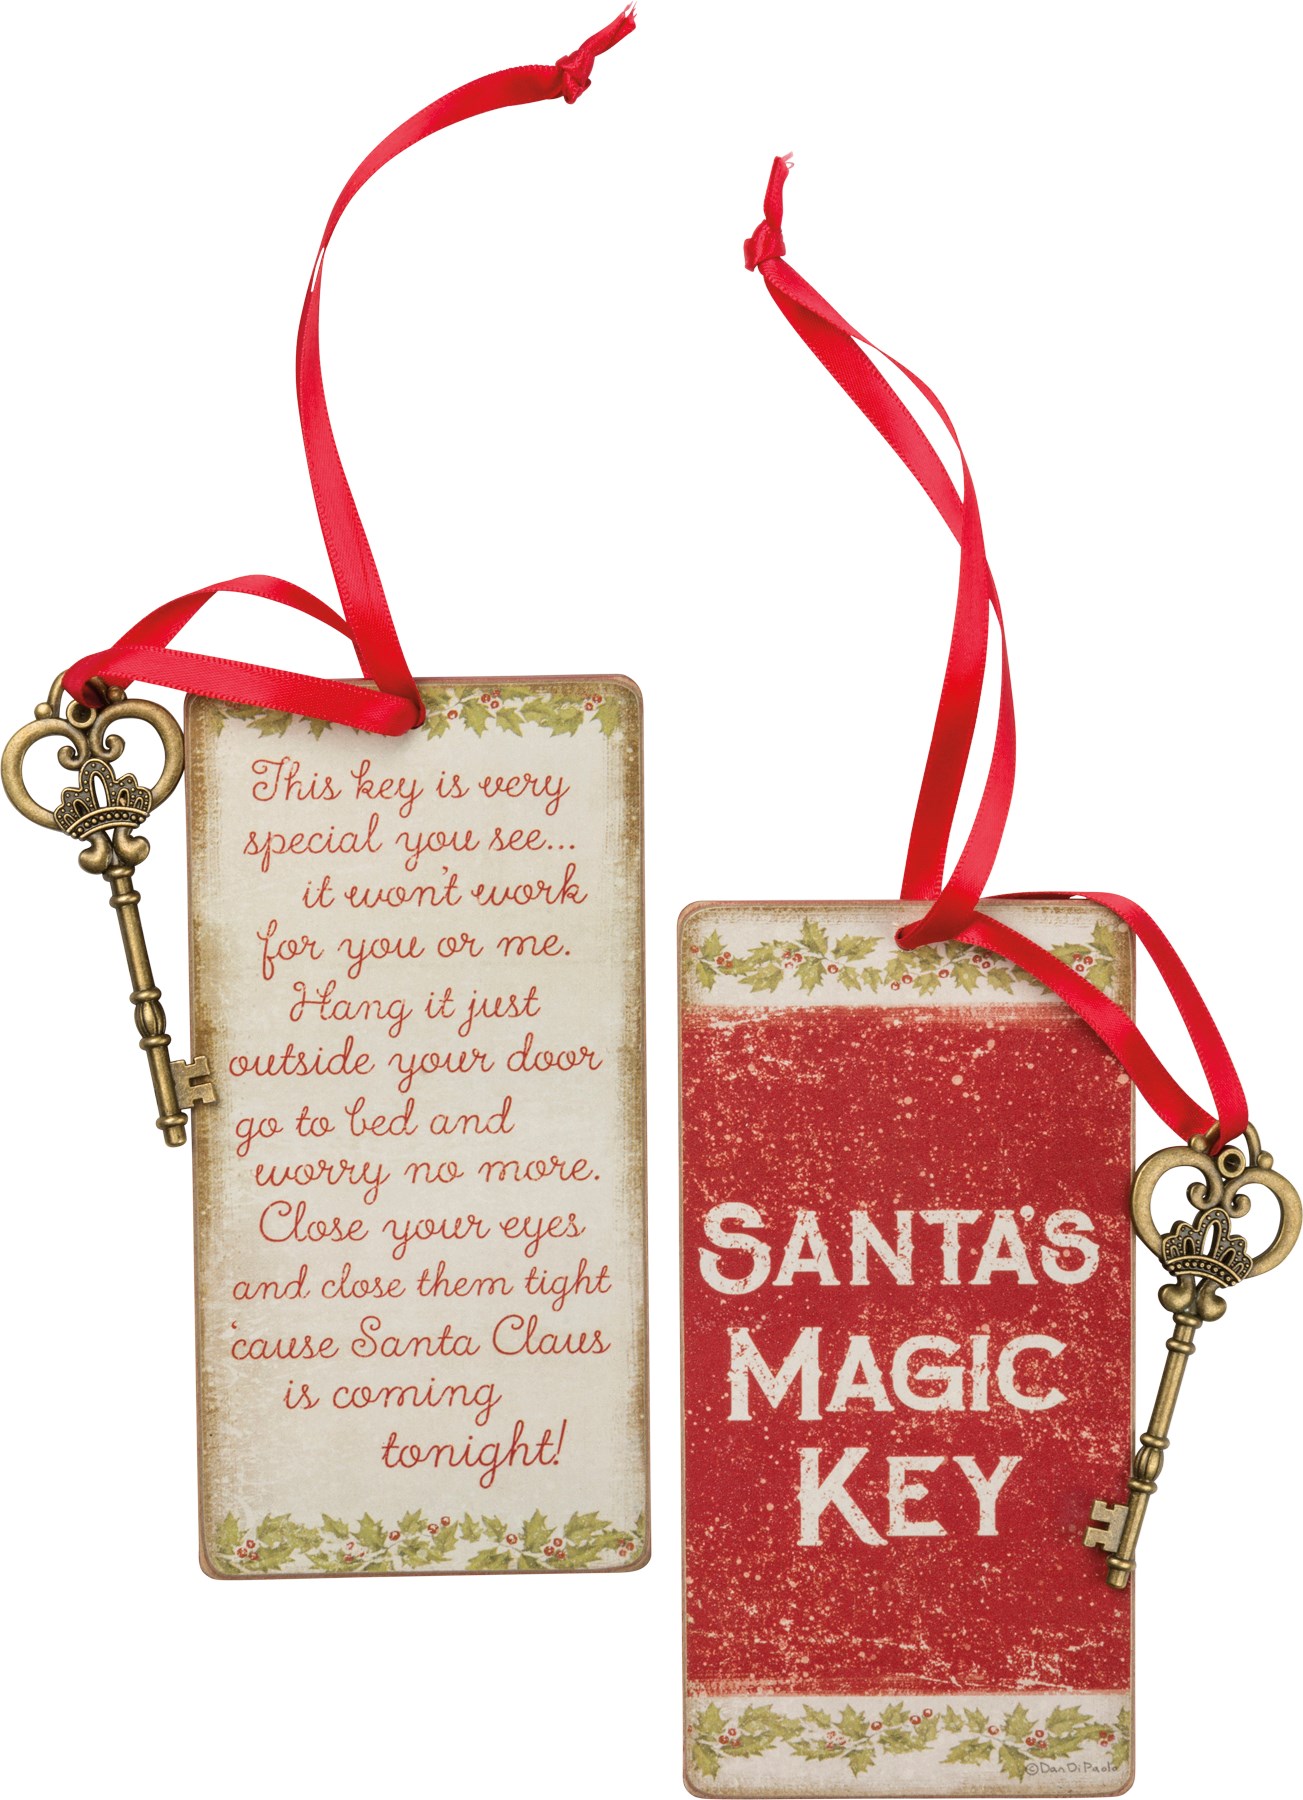 Santa's Magic Key en una bolsa de clave de Santa's Especial!!!